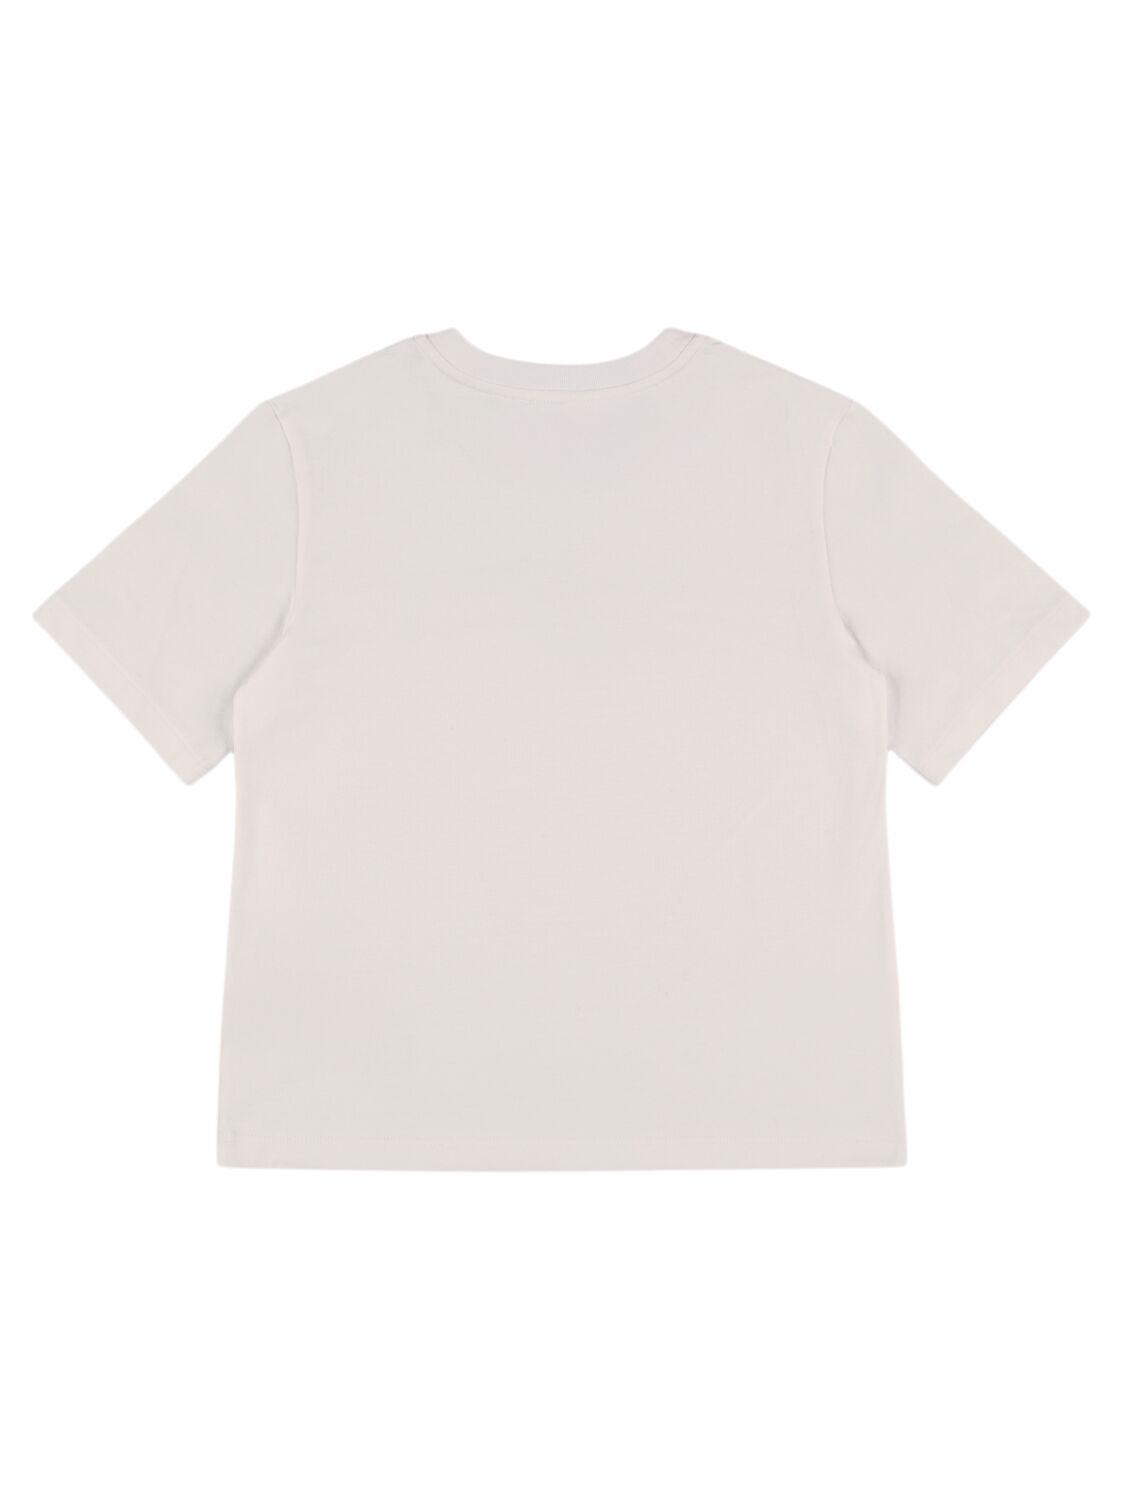 Dolce & Gabbana Babies' Printed Cotton Jersey T-shirt In White